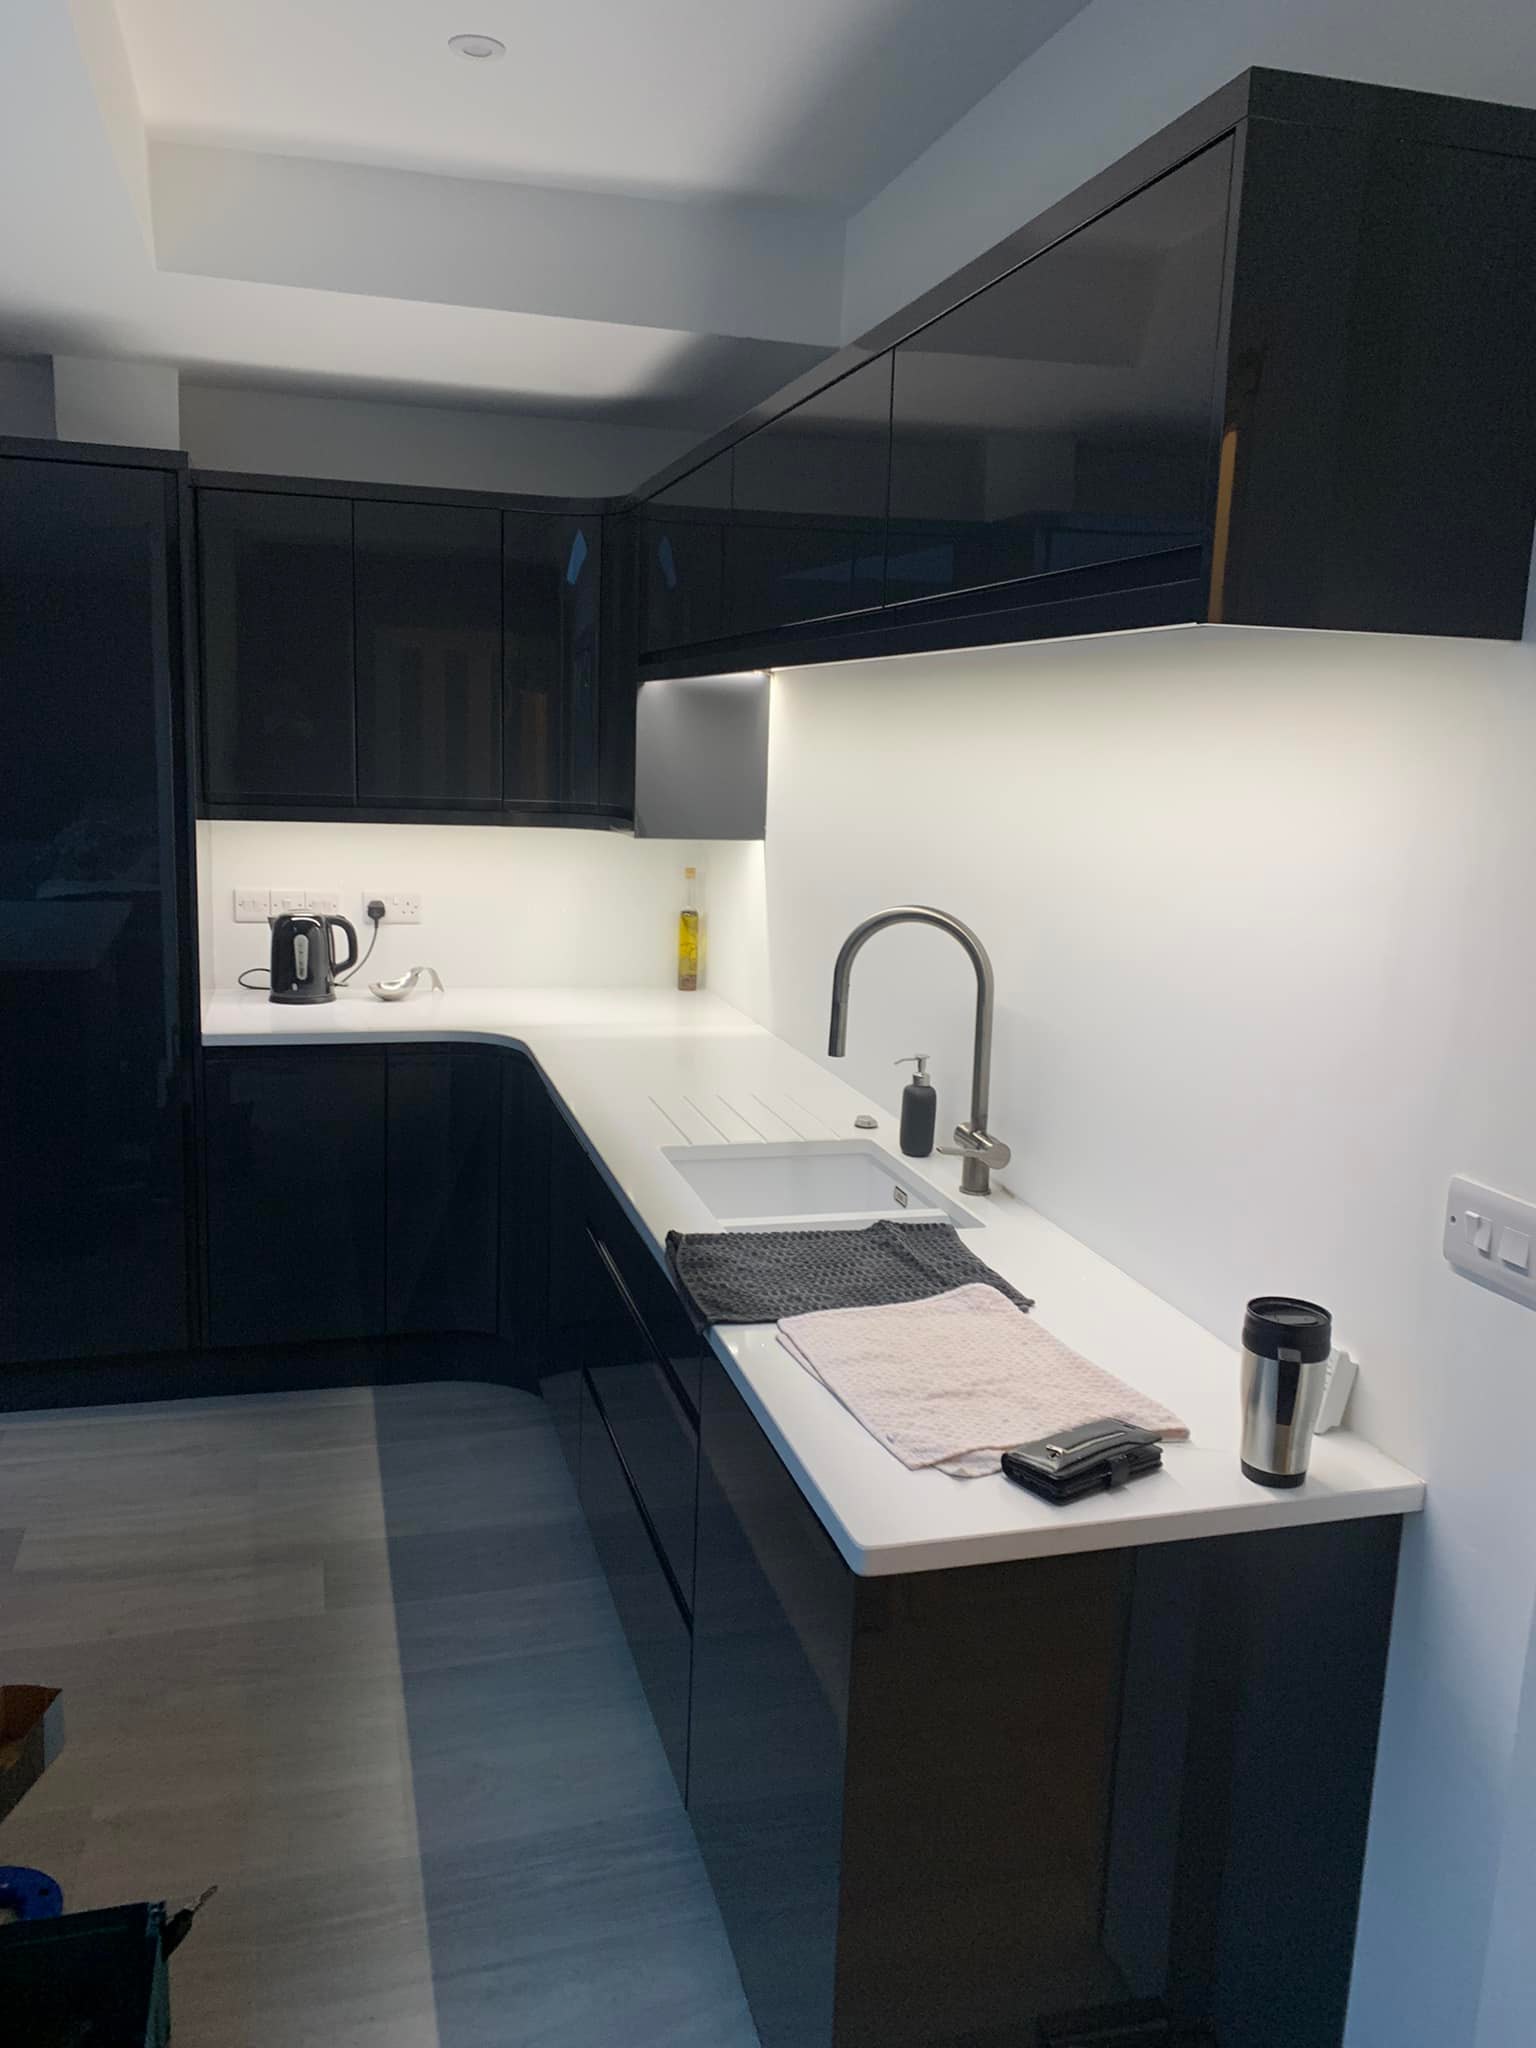 Black kitchen units with LEDS underneath illuminating the worktop